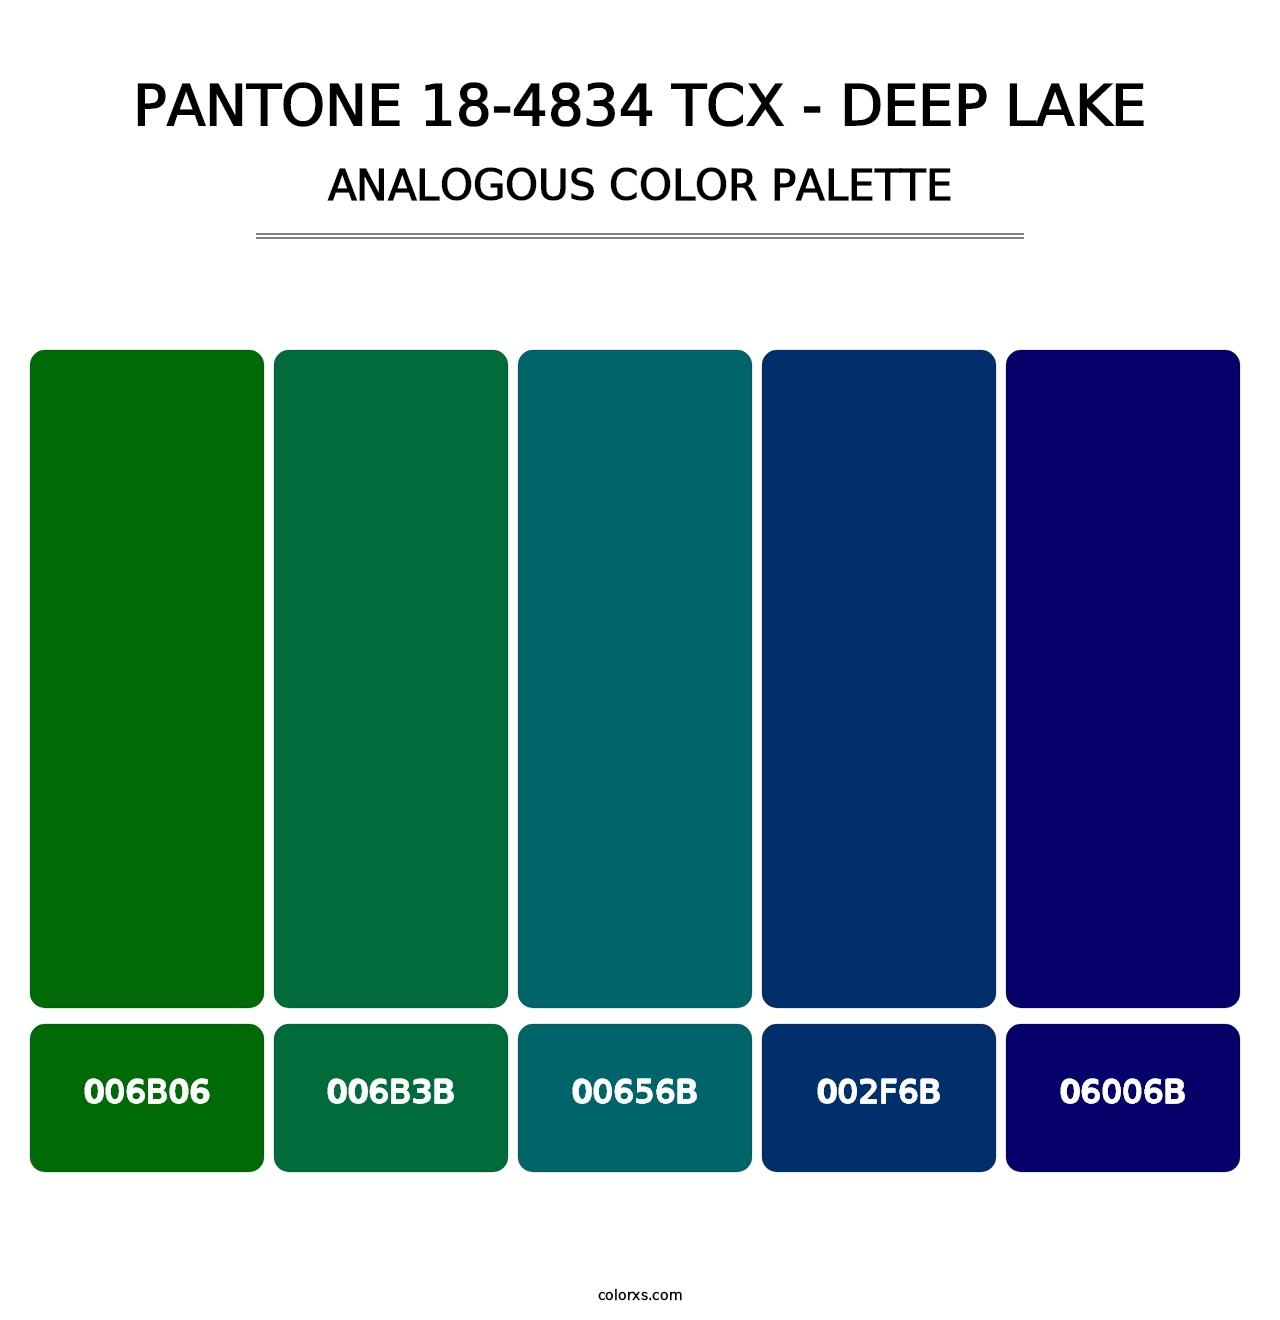 PANTONE 18-4834 TCX - Deep Lake - Analogous Color Palette